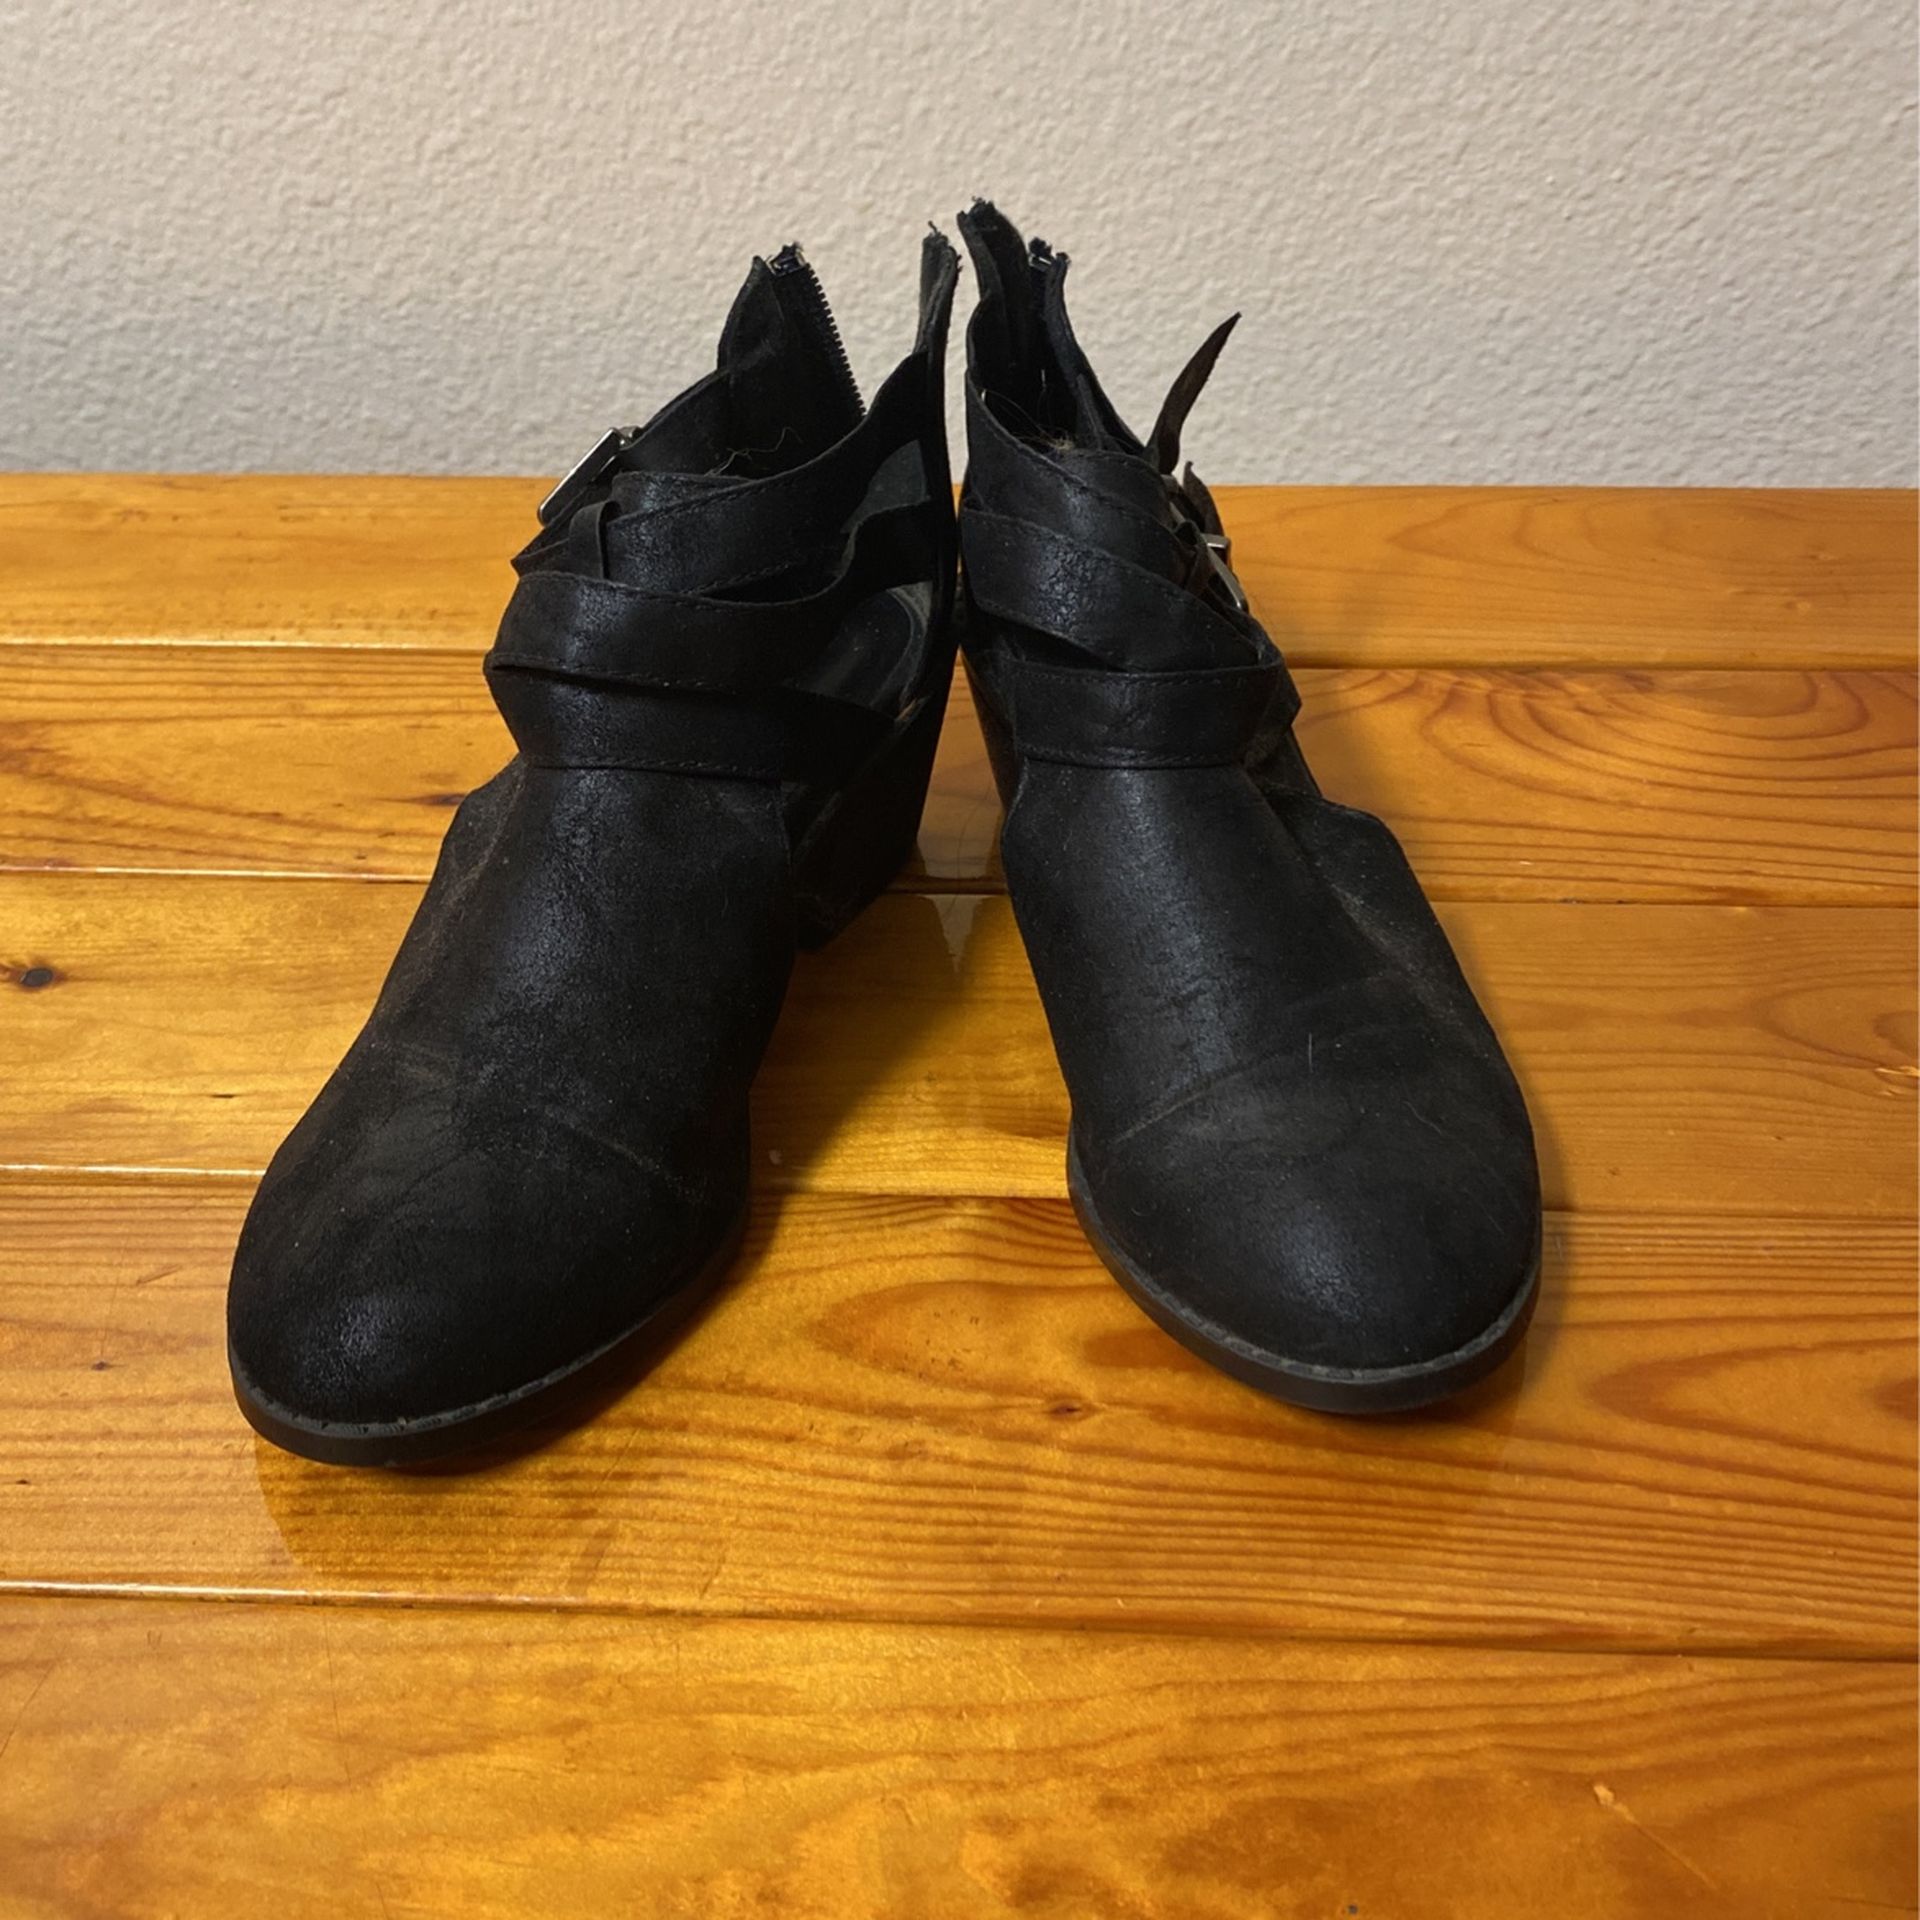 size 1 black short heel shoes